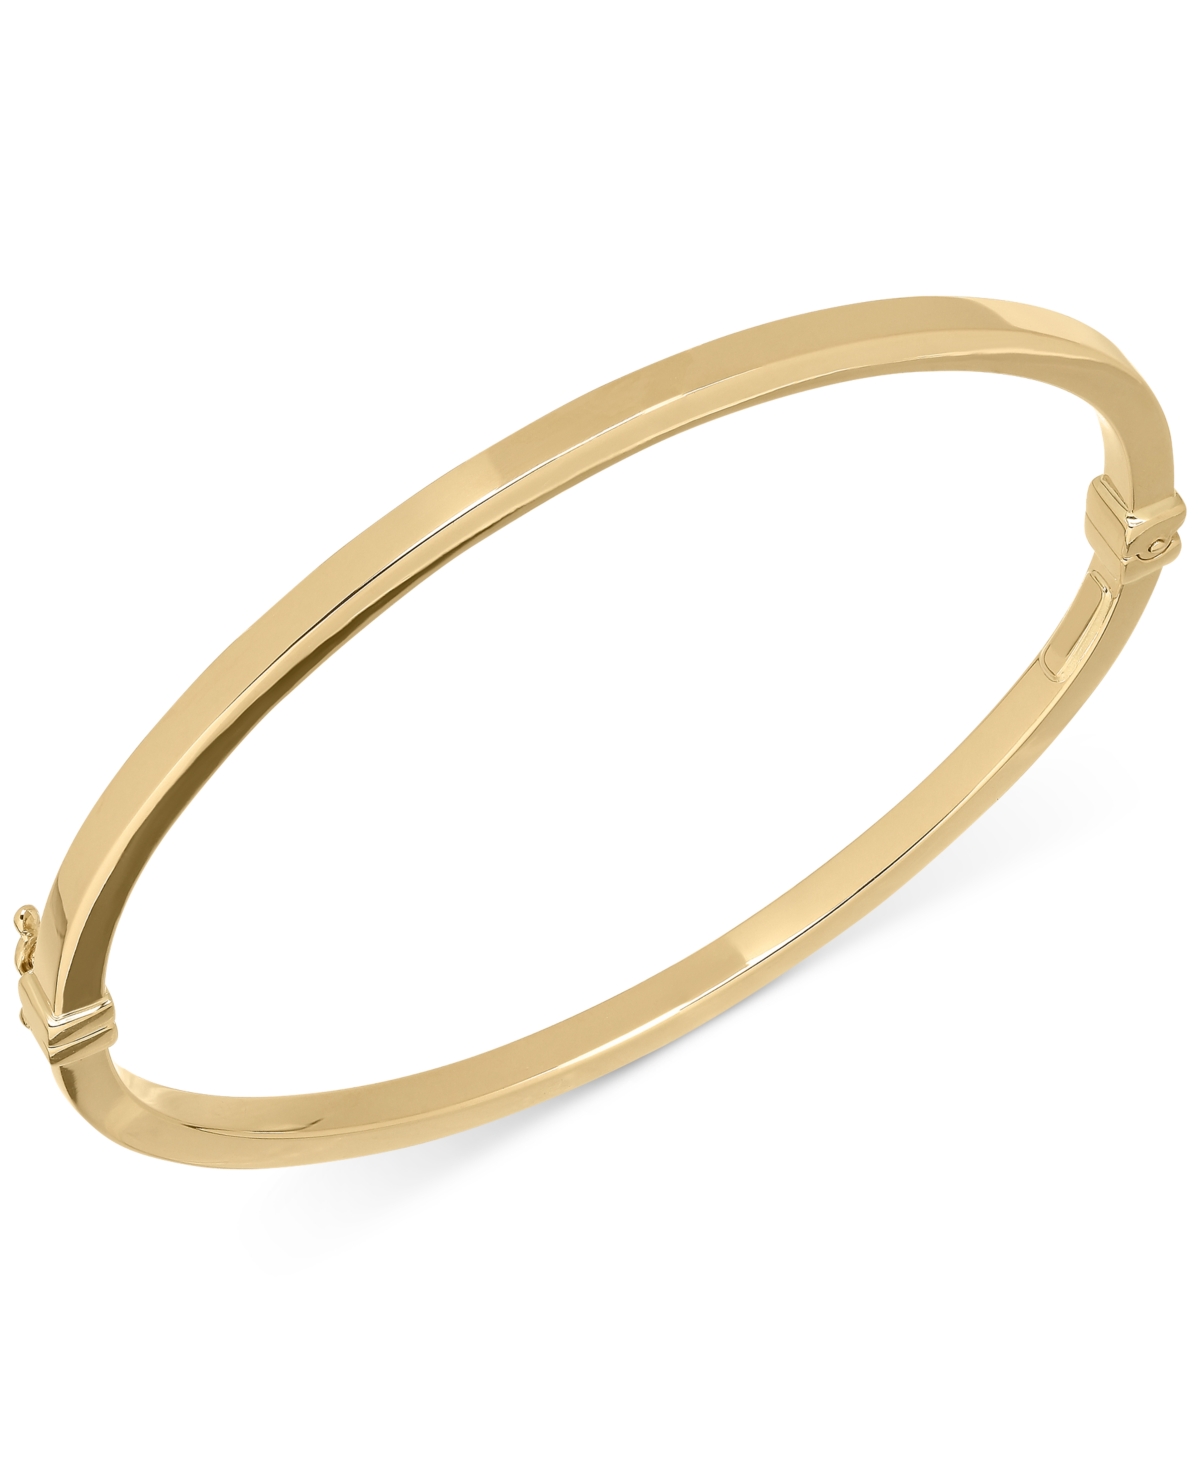 Square Tube Hinge Bangle Bracelet in 14k Gold - Yellow Gold